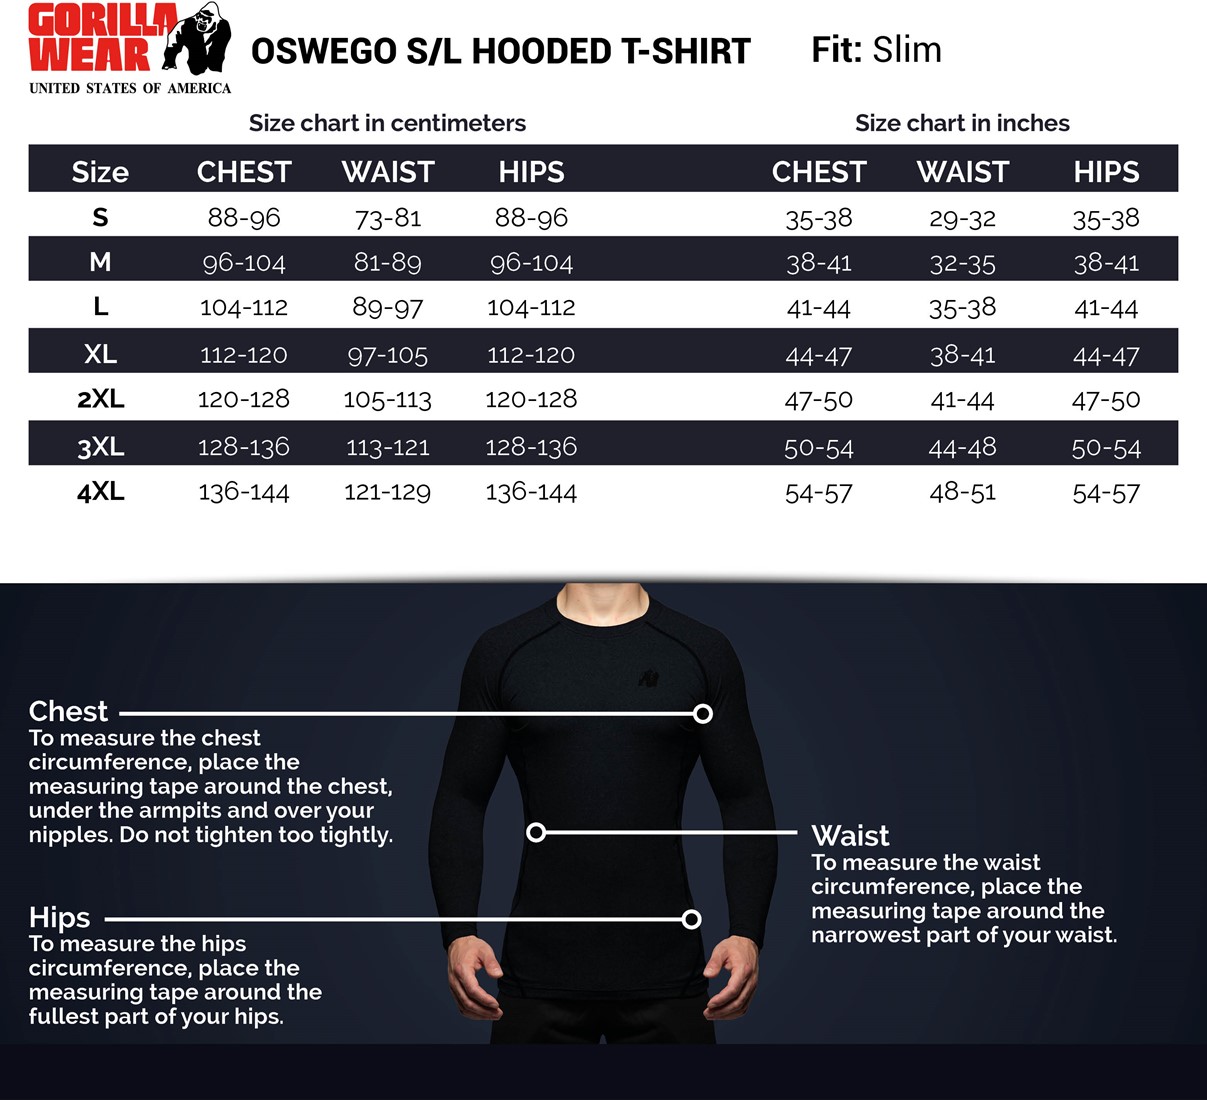 oswego-s-l-hooded-t-shirt-sizechart (1)